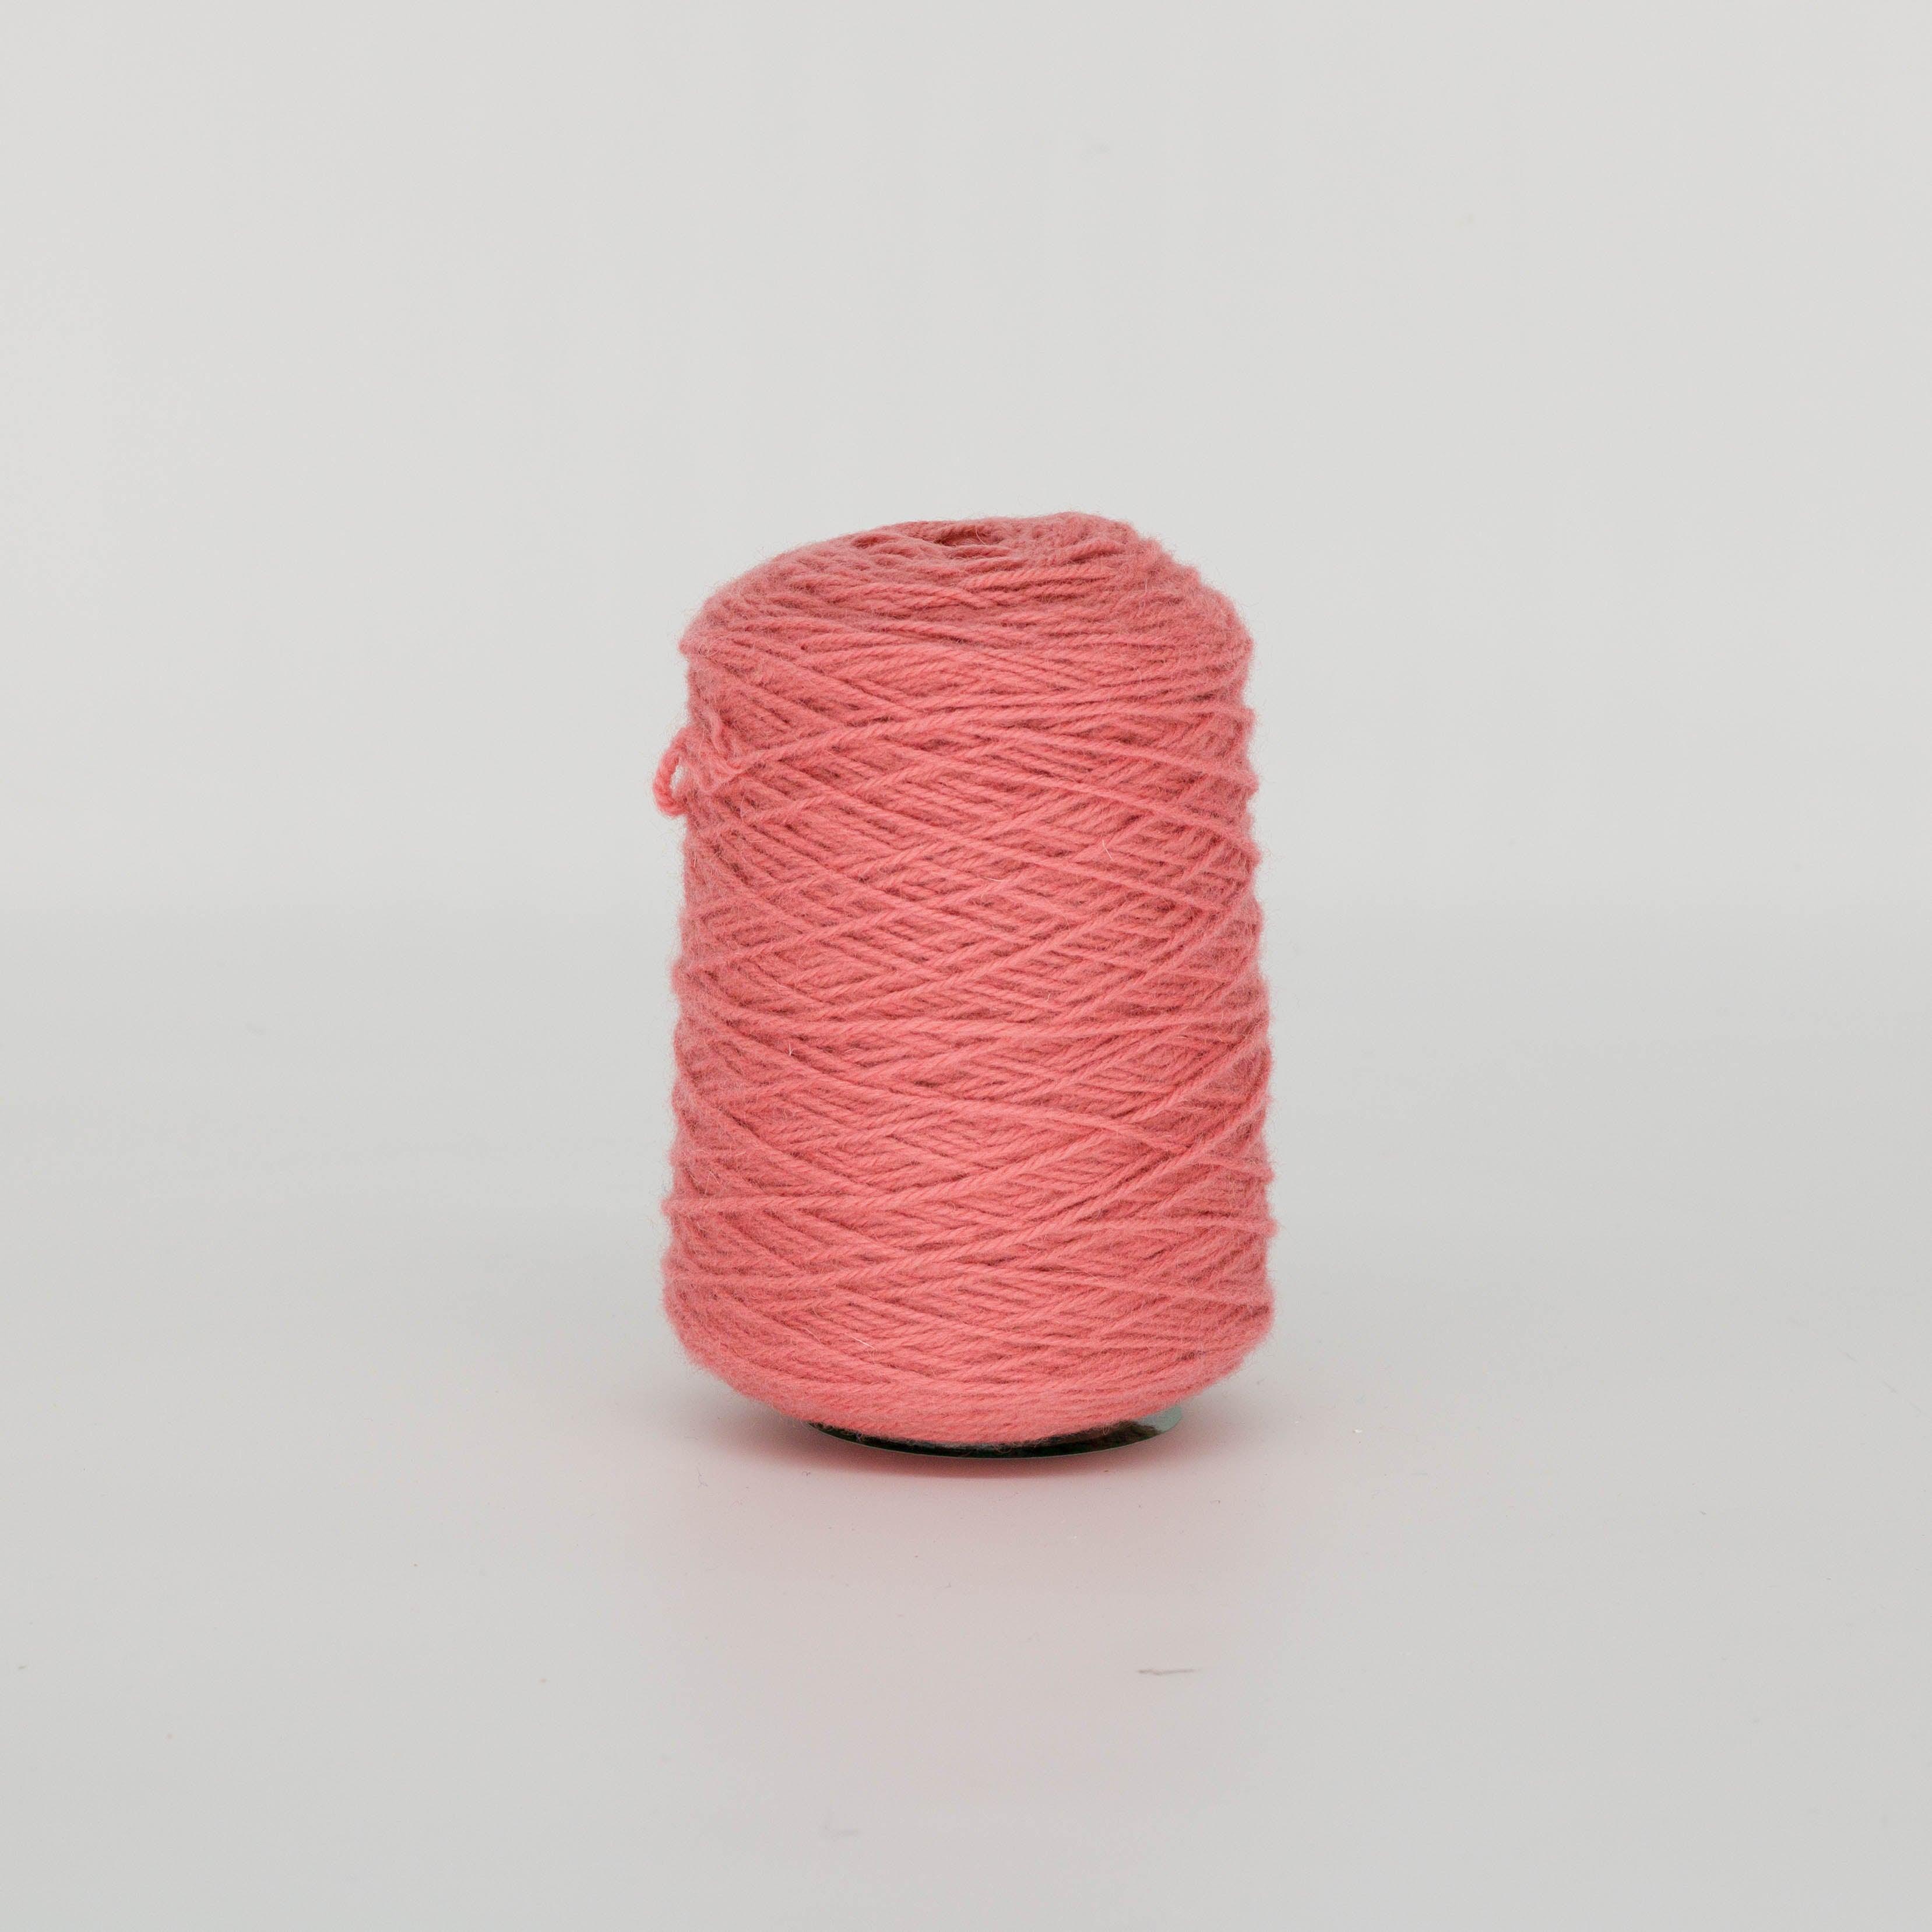 Indian red 100% Wool Rug Yarn On Cones (456) - Tuftingshop